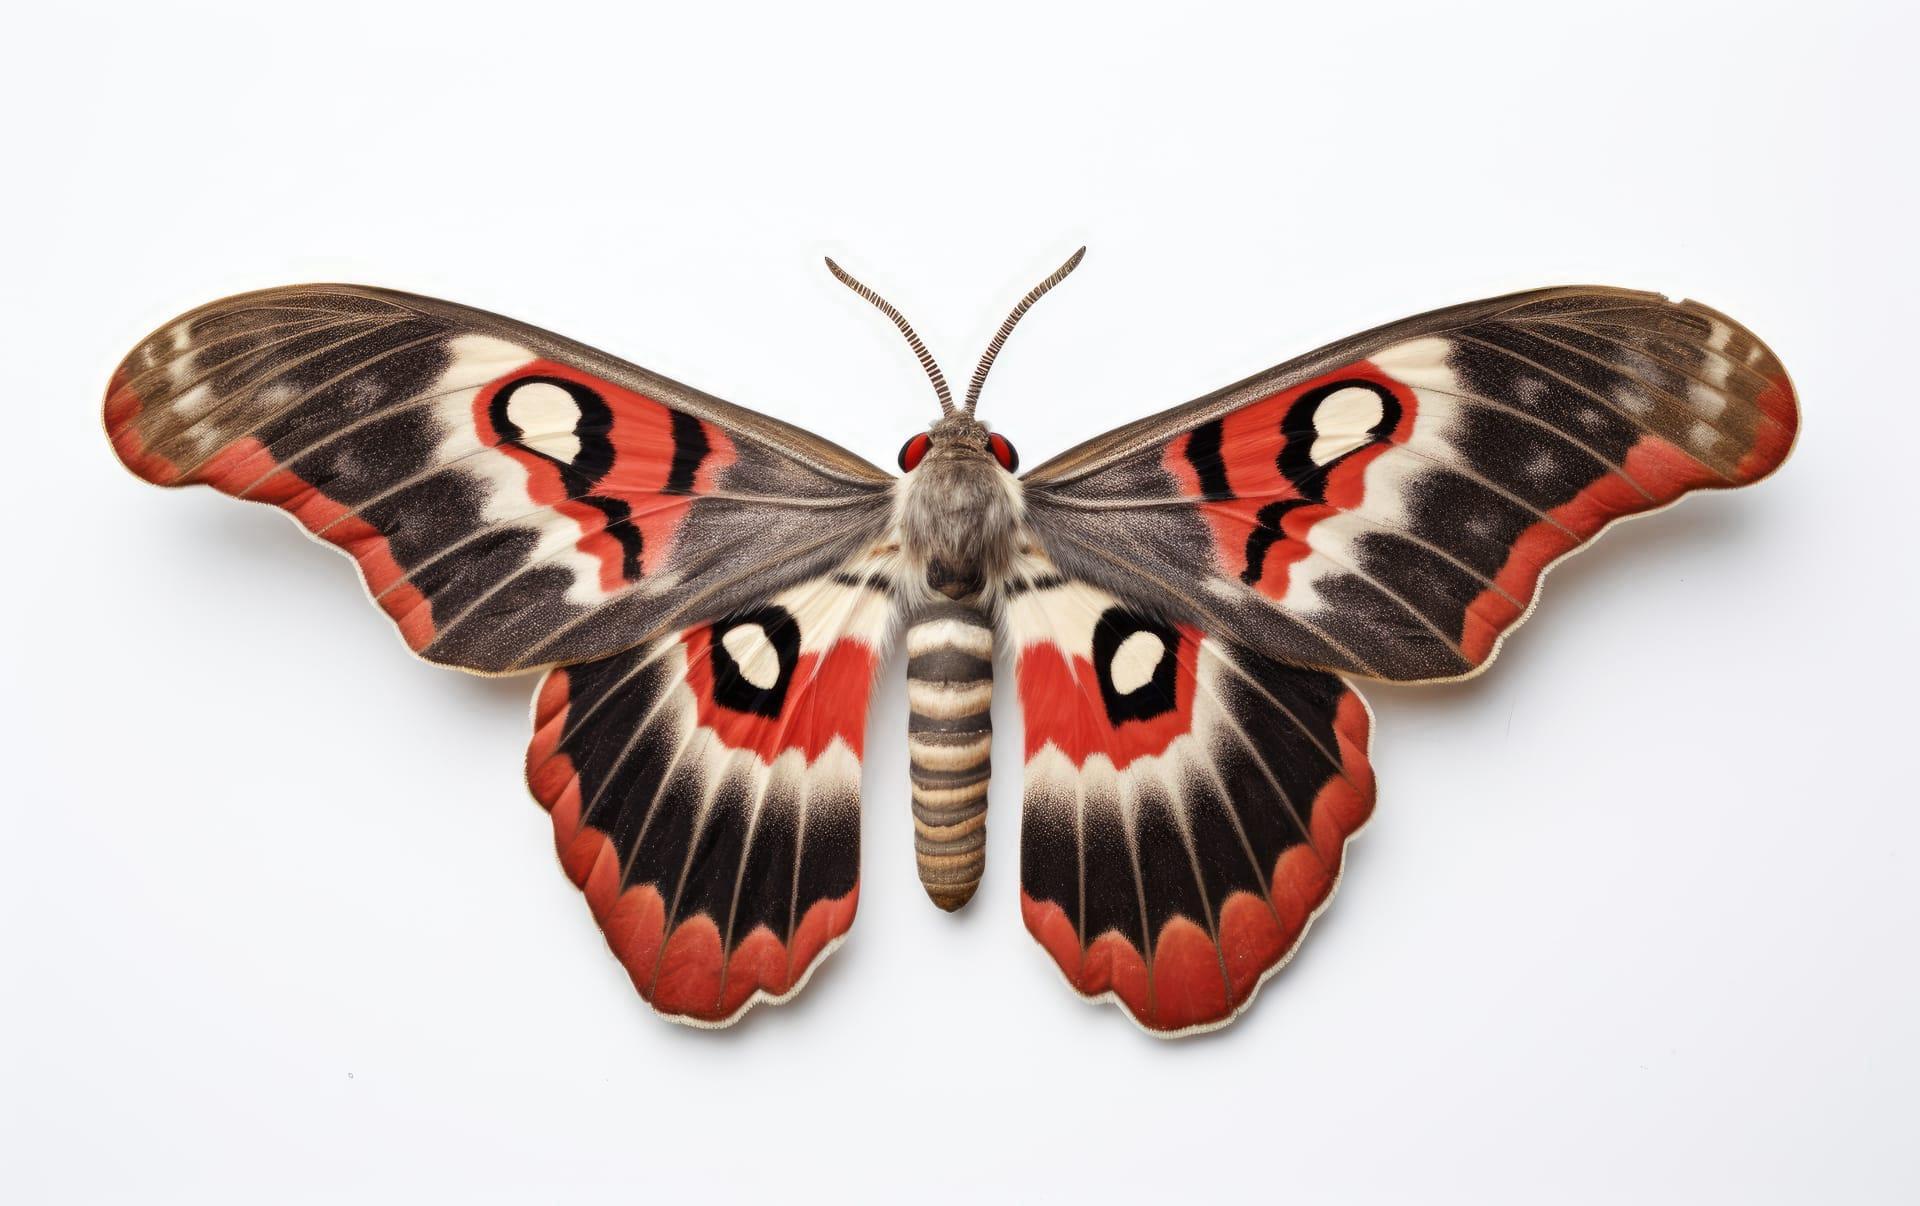 Cecropia moth pictures